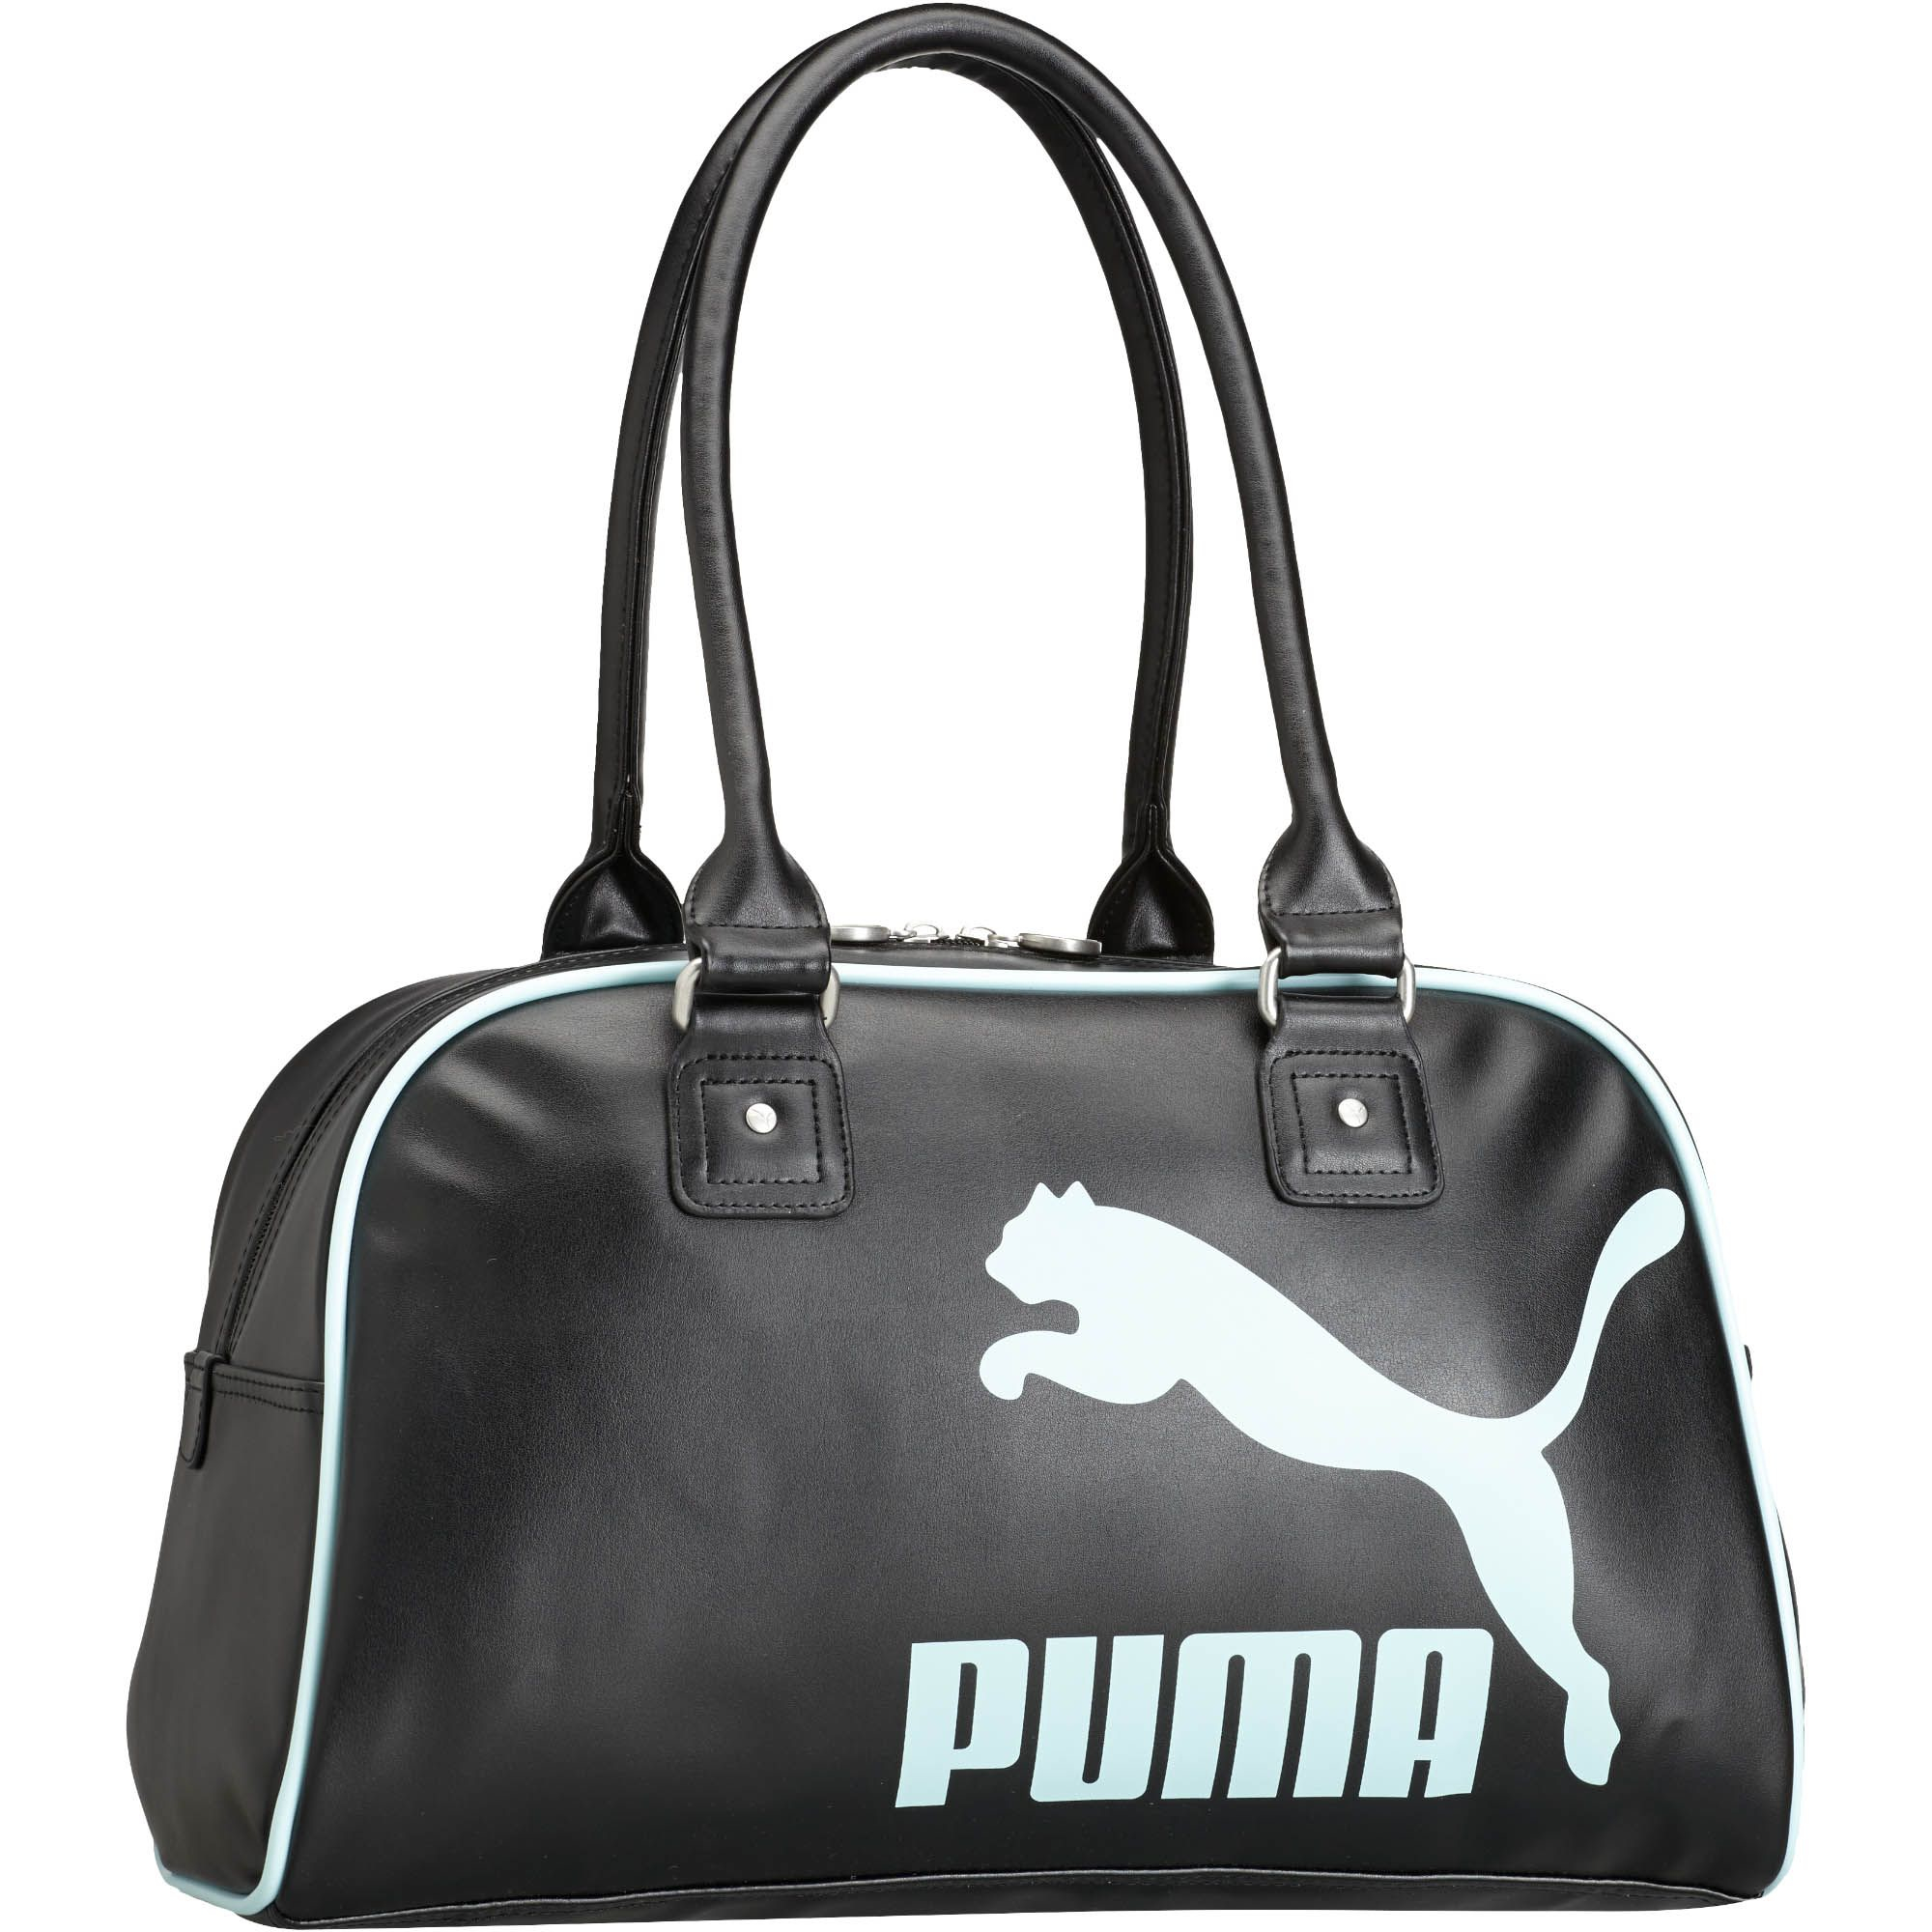 puma heritage handbag